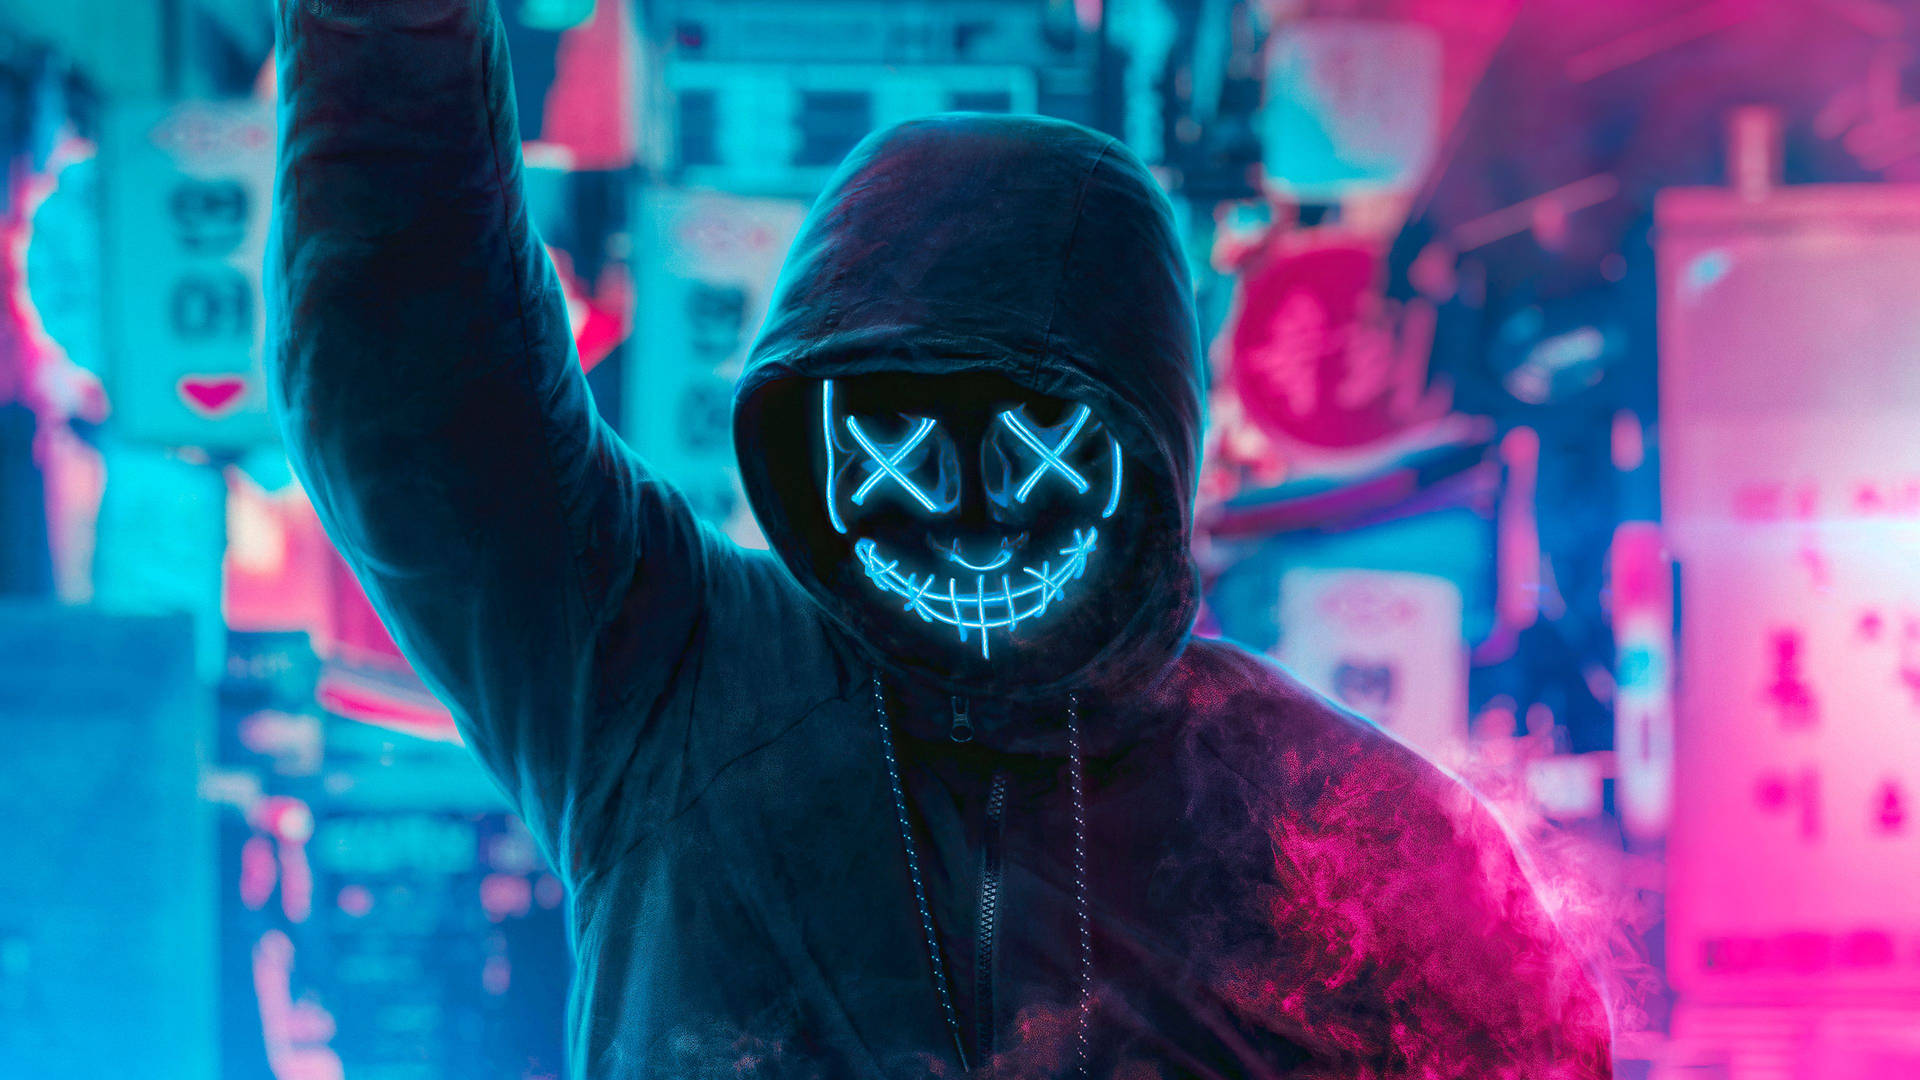 Glowing Neon Purge Mask Guy Wallpaper